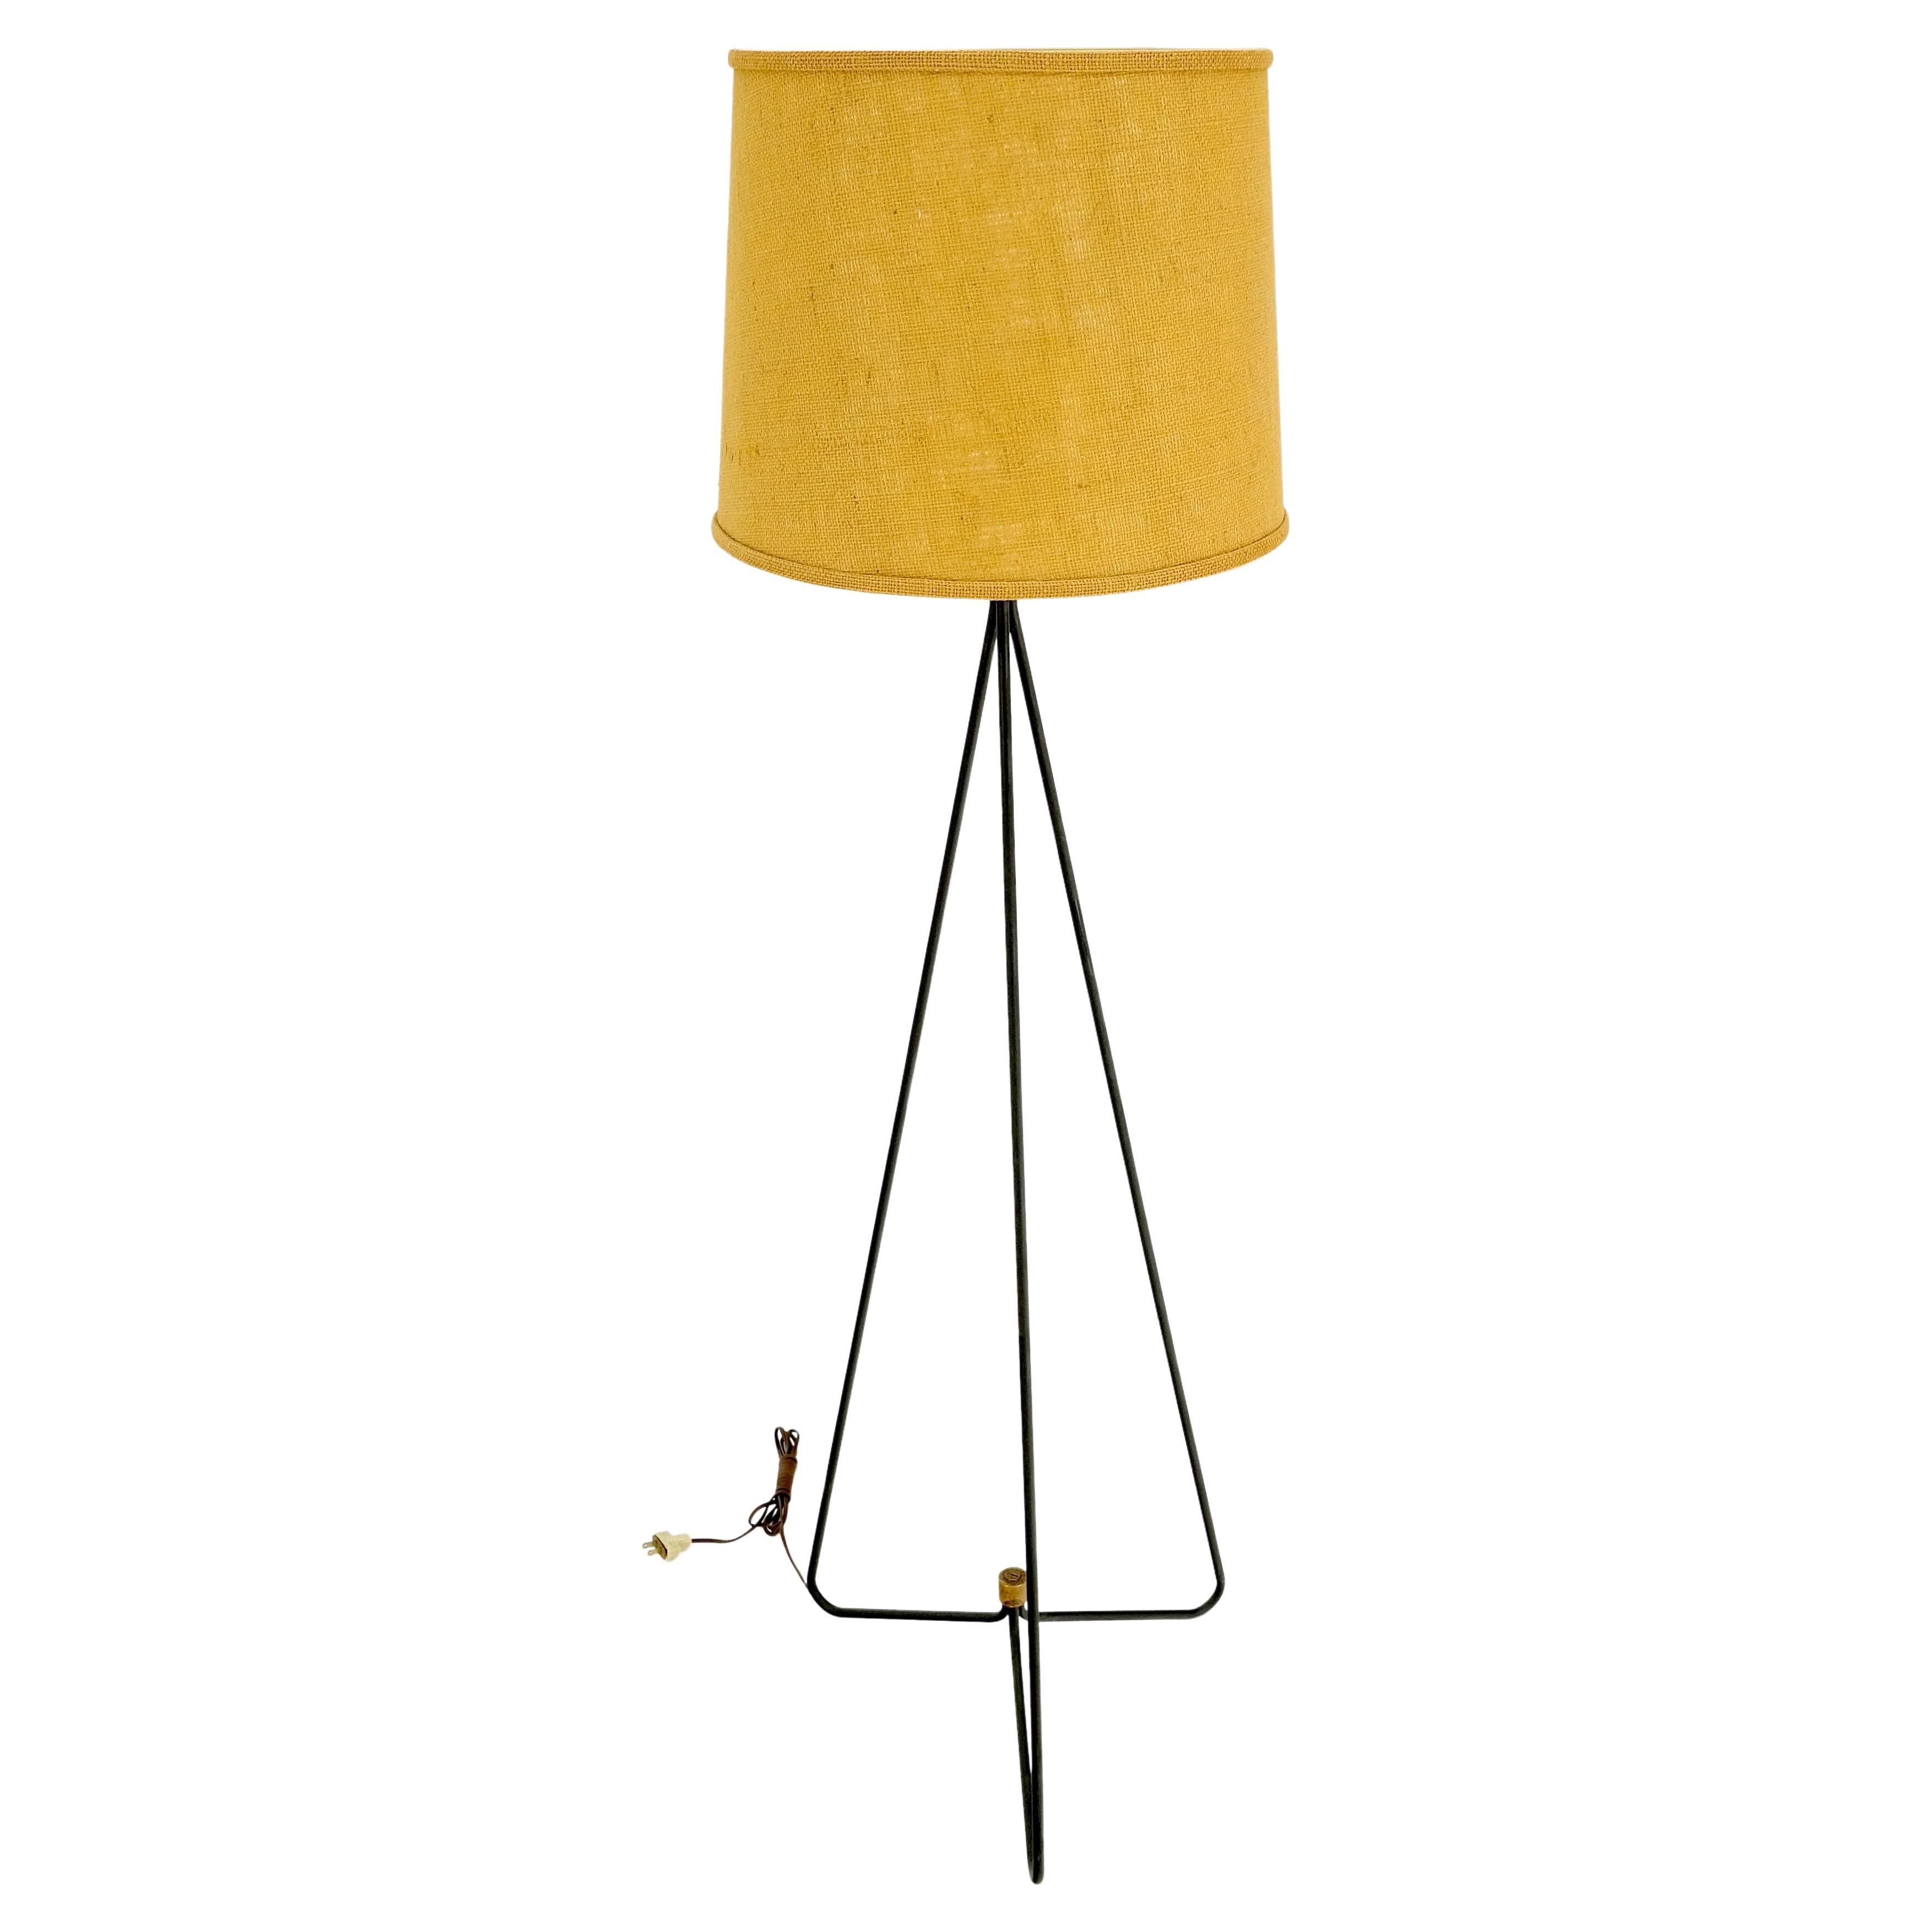 Mid-Century Modern wire tripod base brass finial floor lamp atr. to Frederic Weinberg.